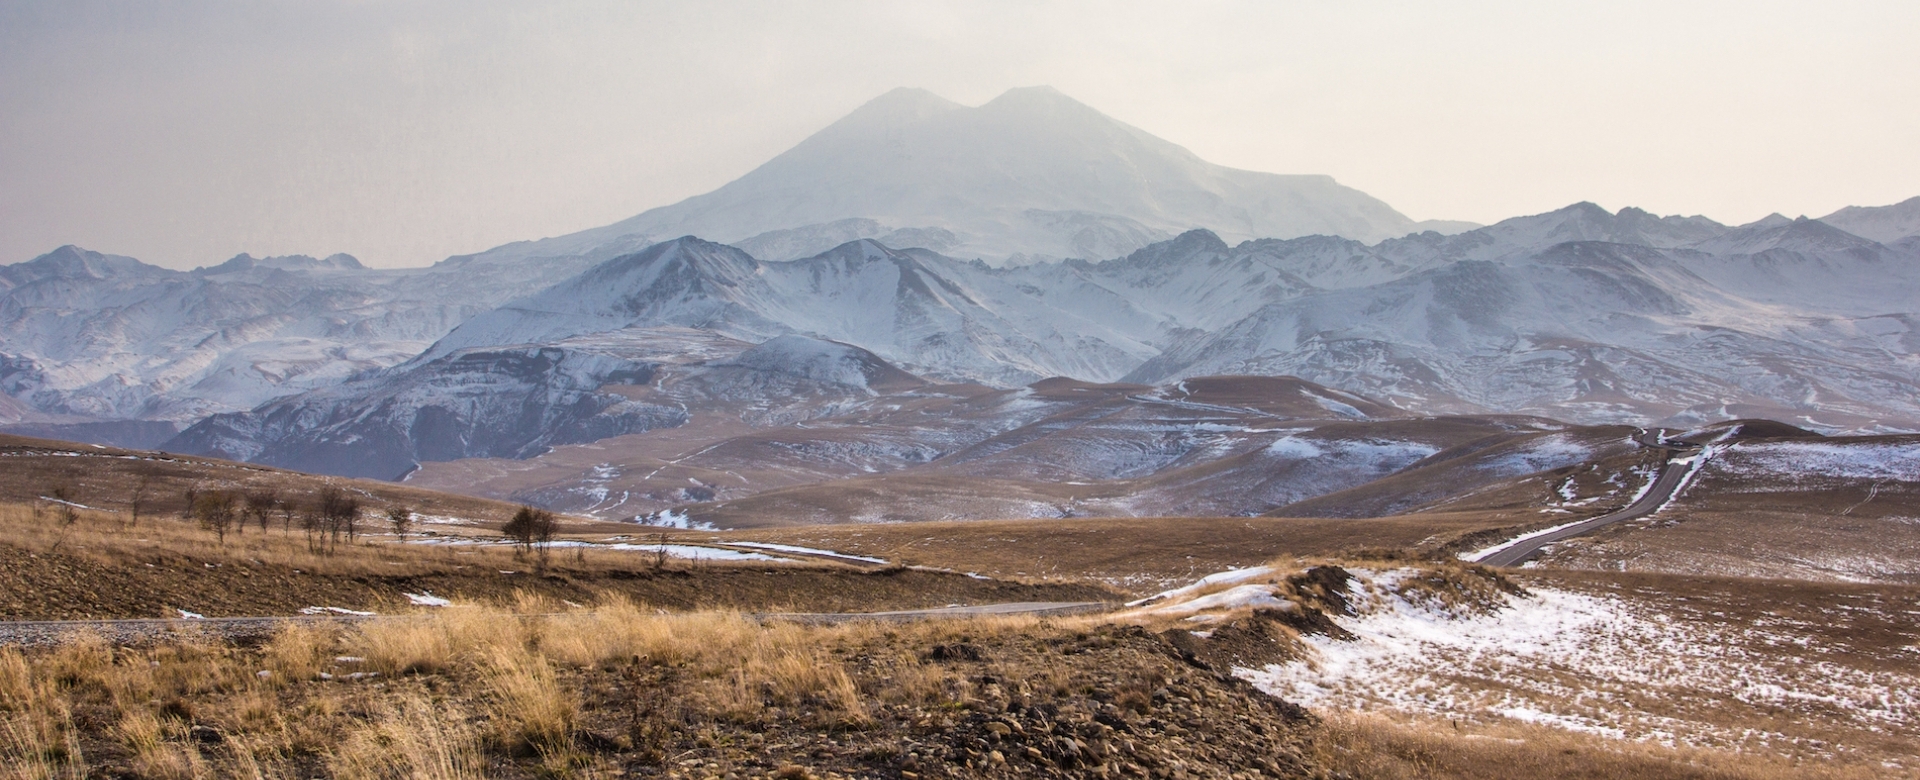 Elbrus mountain and region